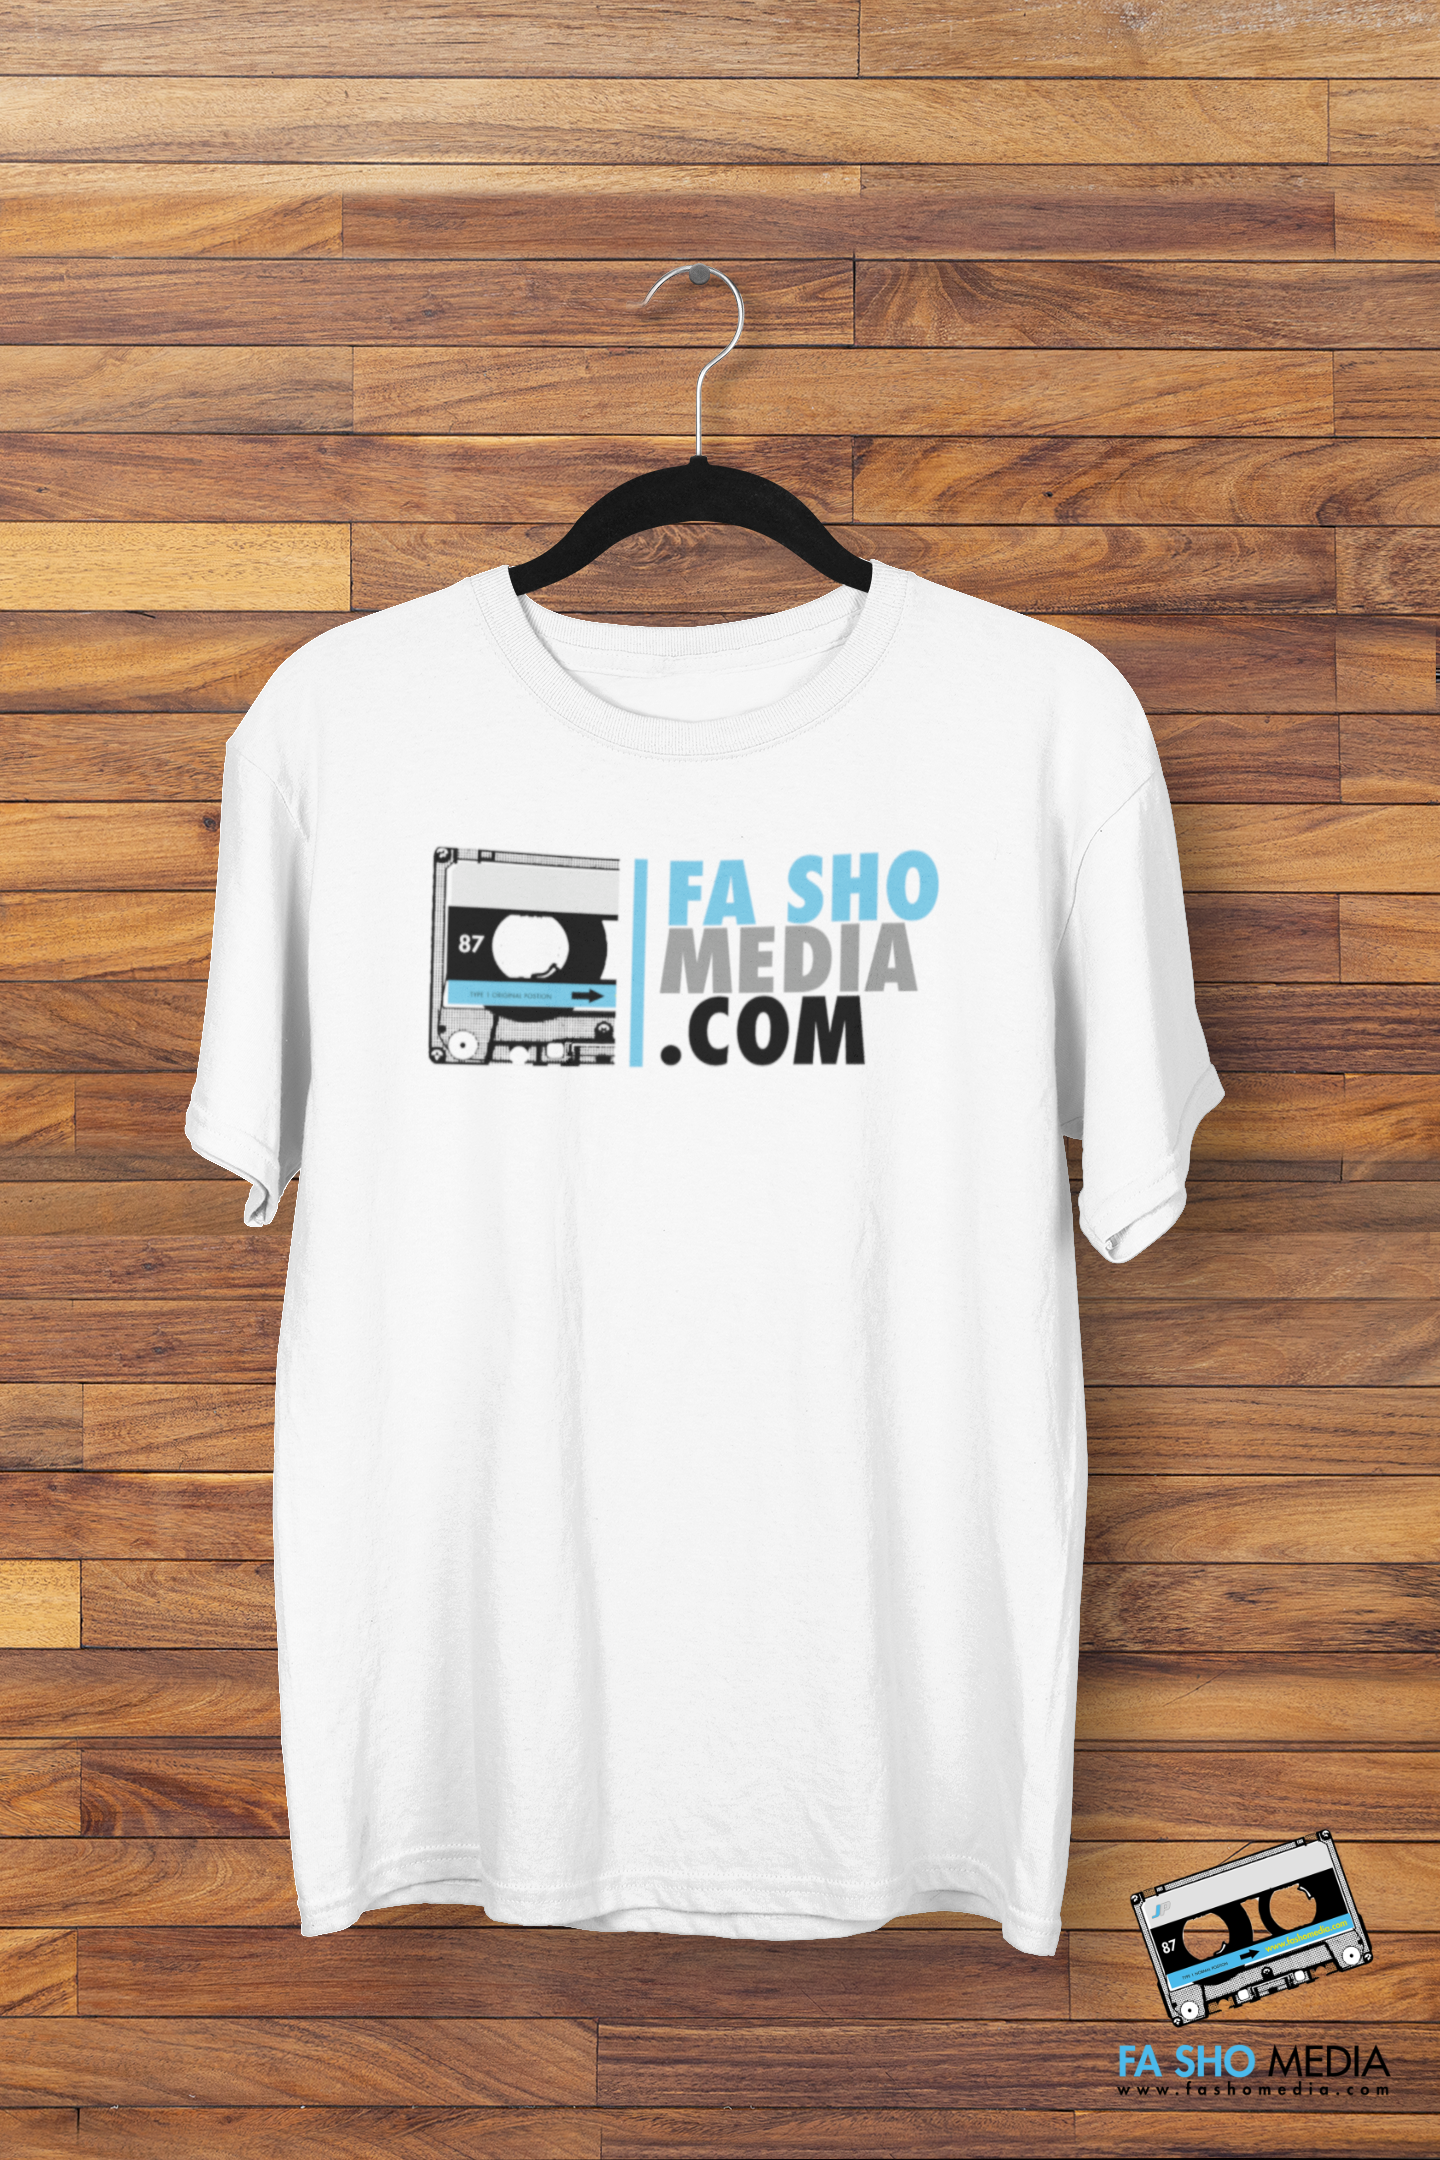 Fa Sho Media Cassette Shirt